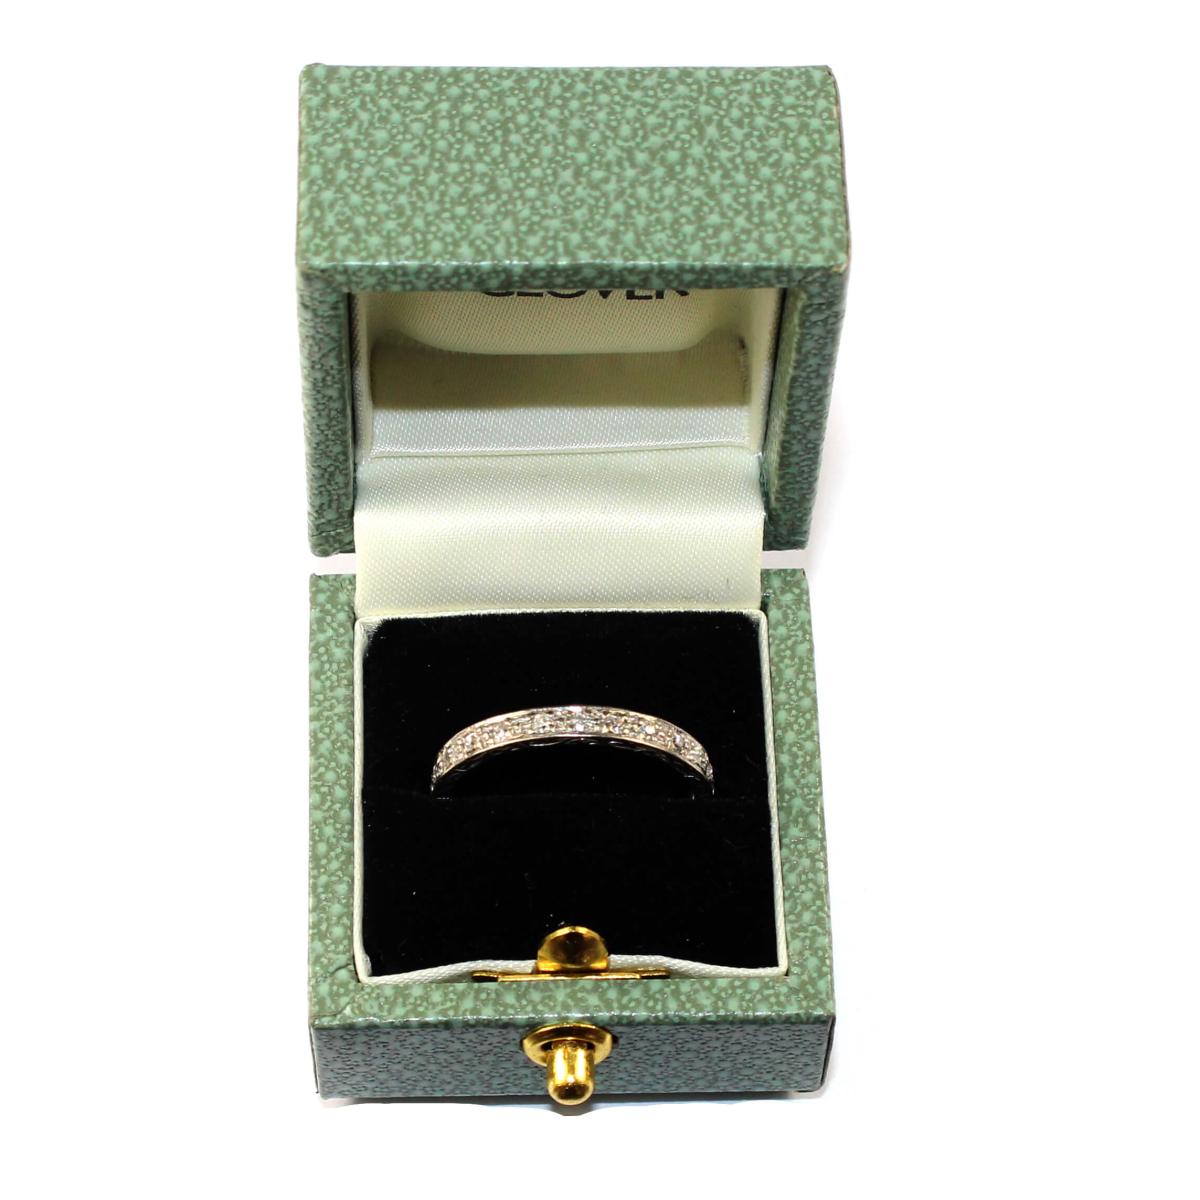 Art Deco Diamond Eternity Ring circa 1935 size P